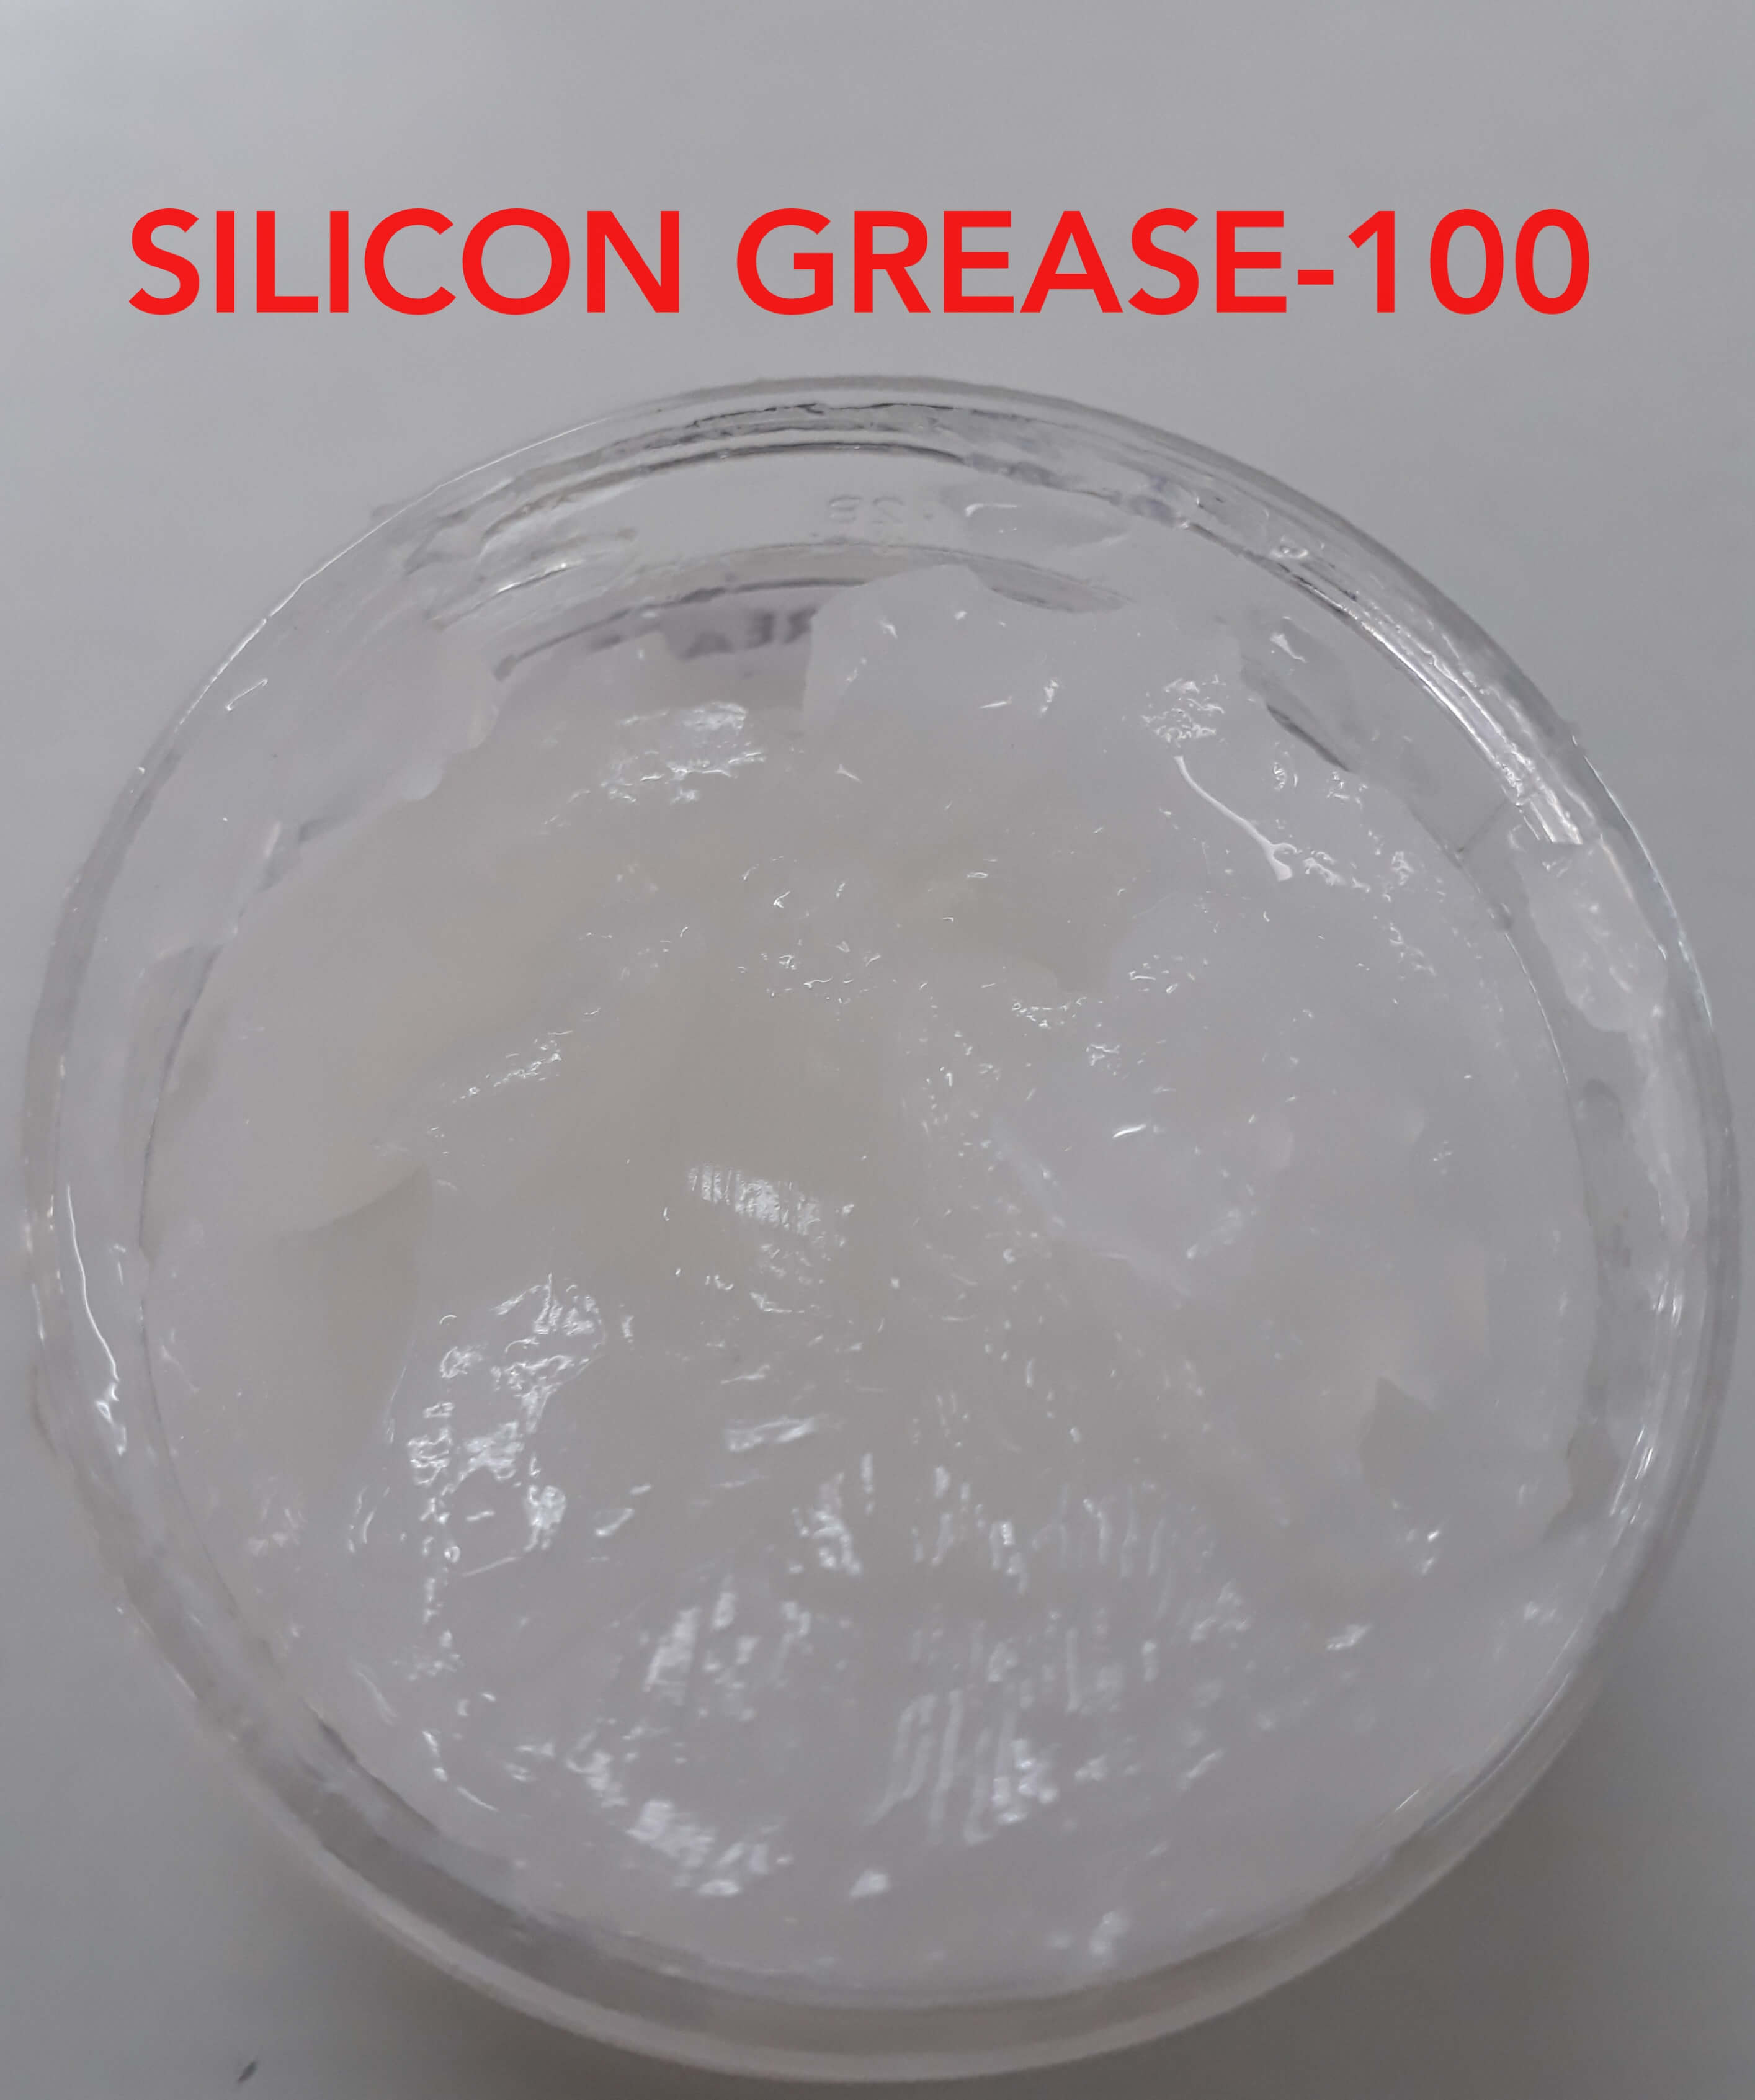 Silicon Grease-100